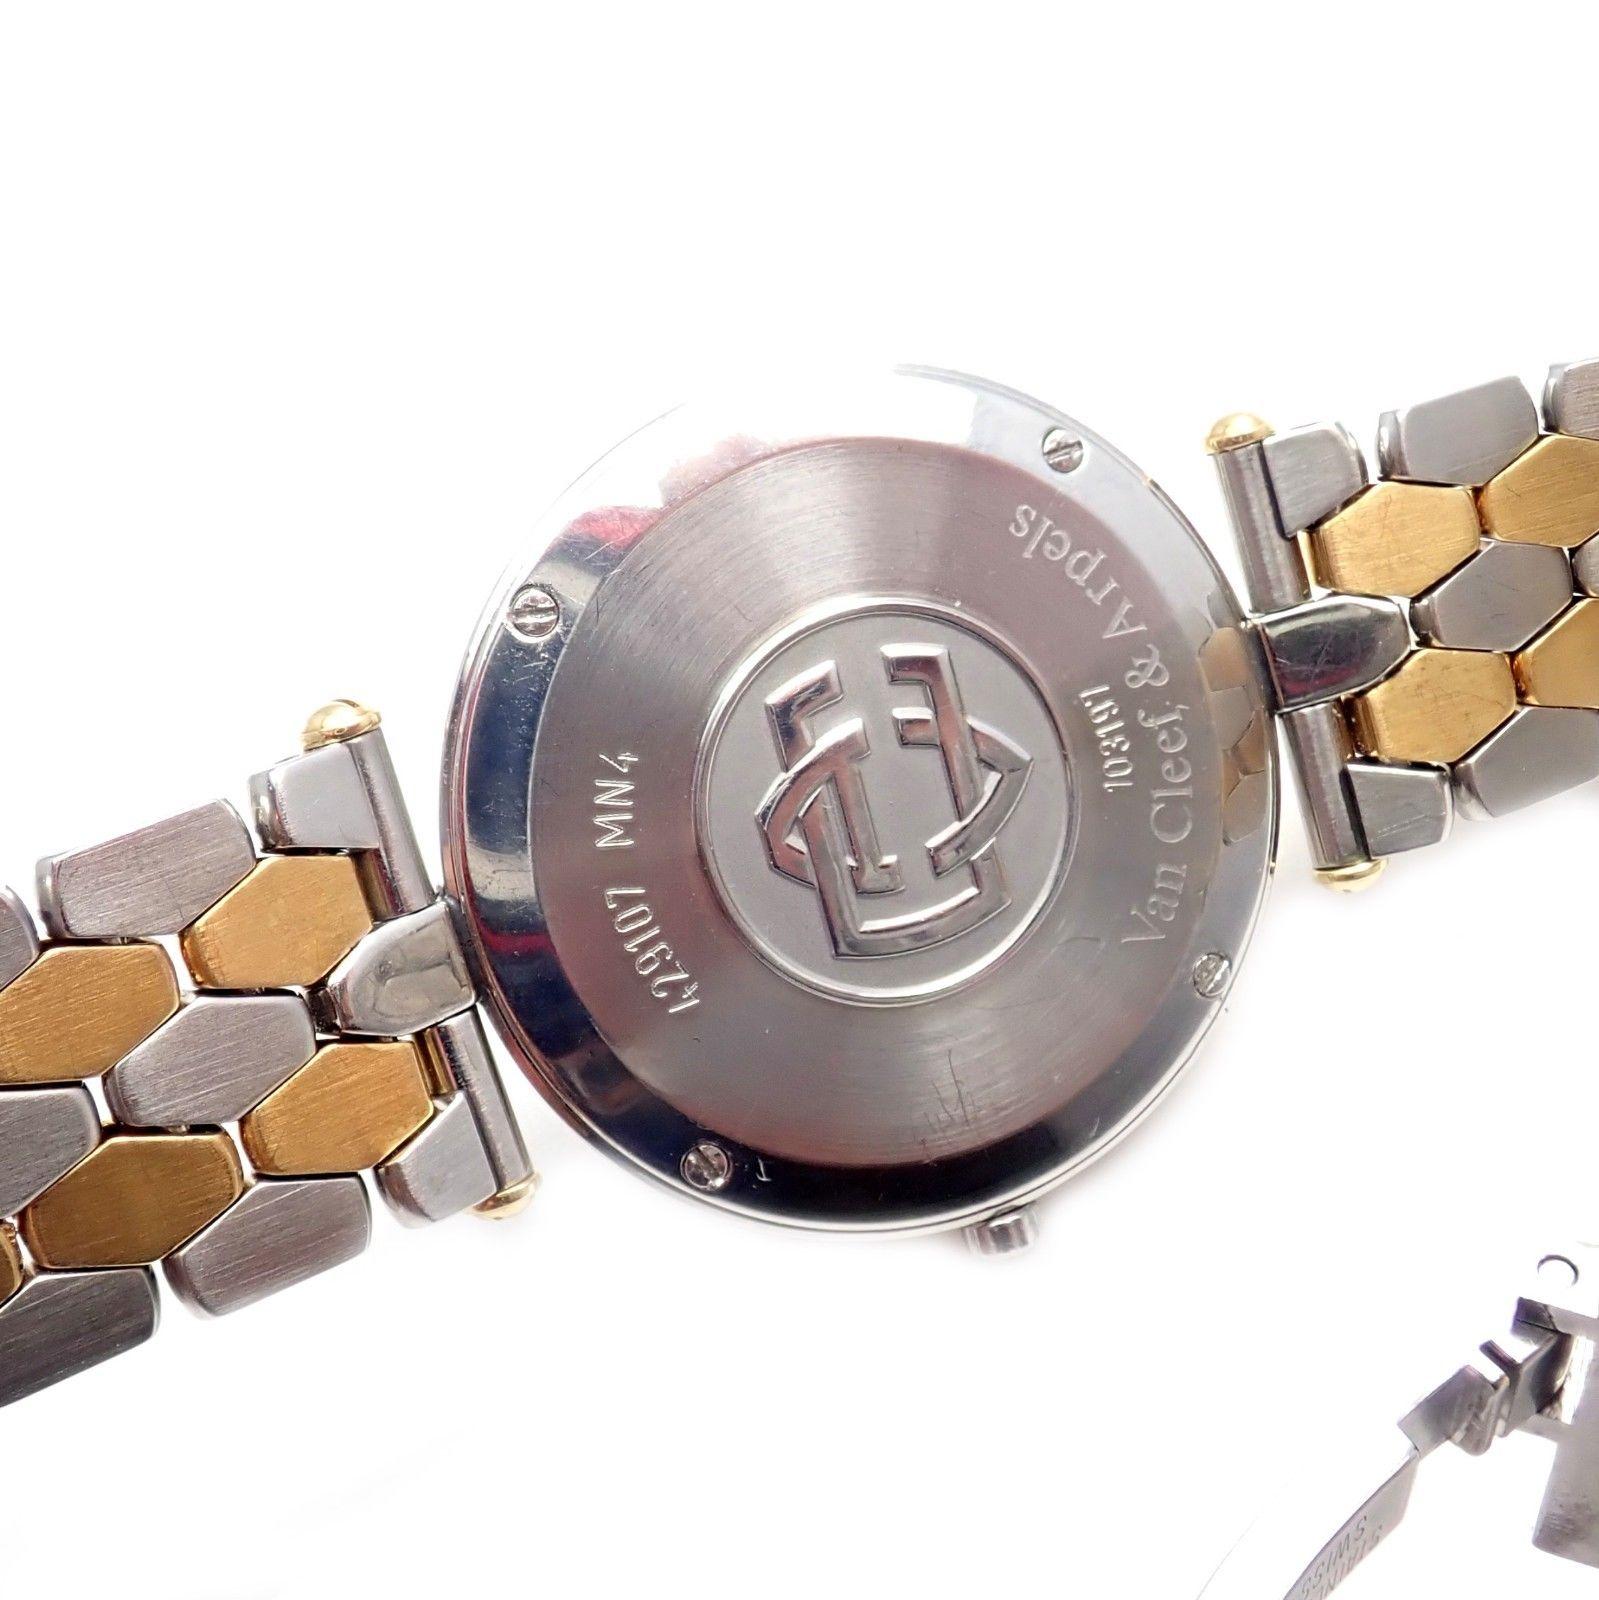 Van Cleef & Arpels Classique Quartz Gold and Stainless Steel Watch 1